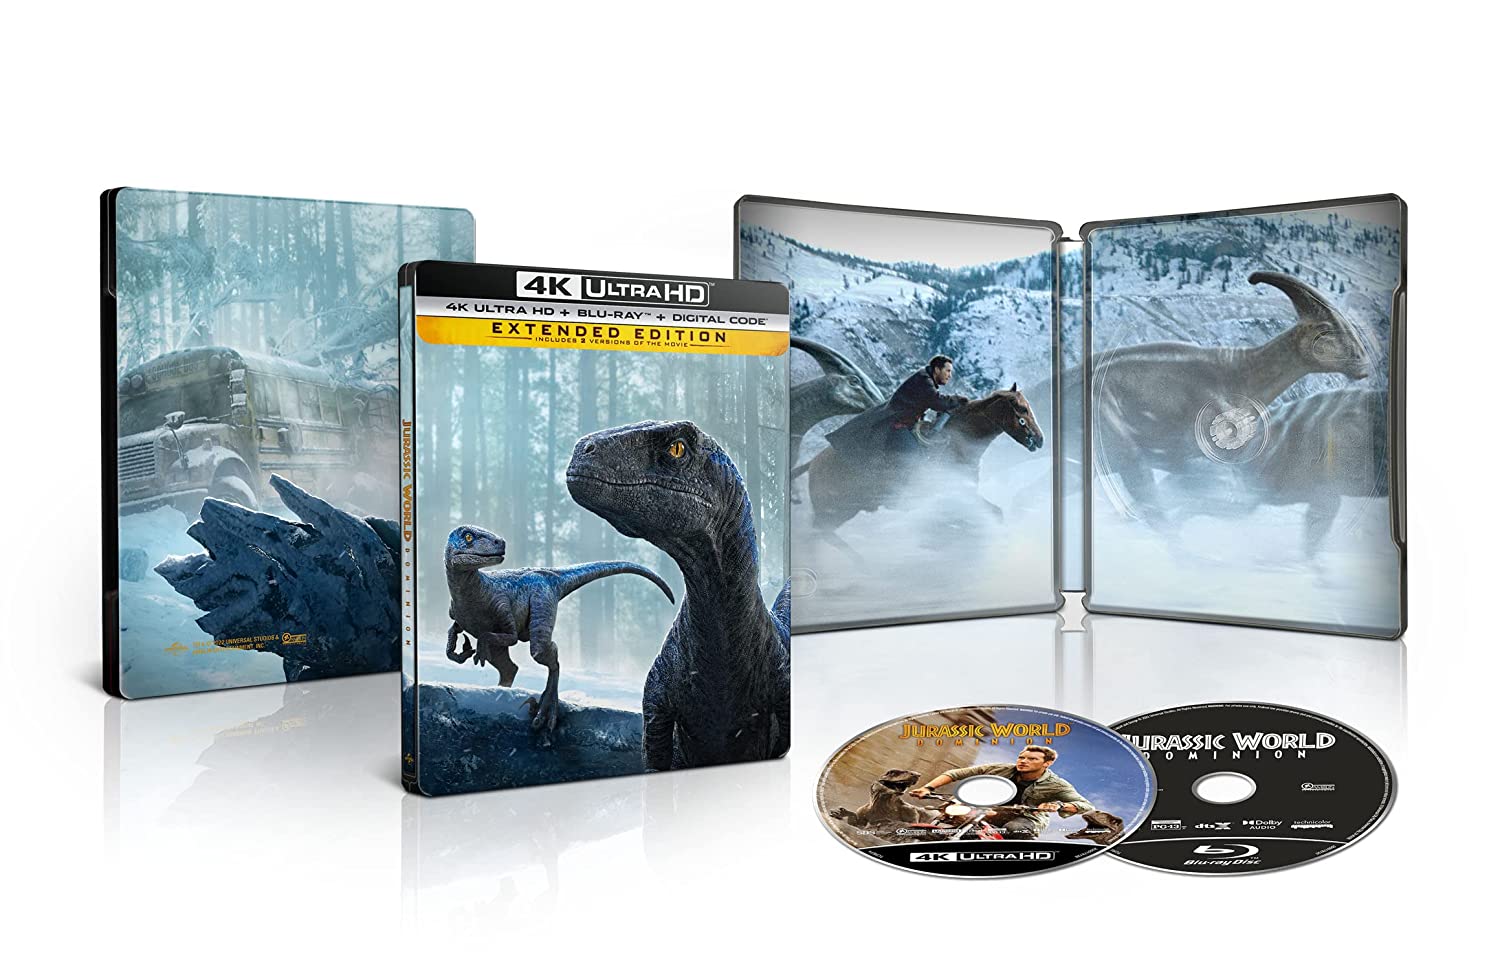 Jurassic World: Dominion (DVD) Chris Pratt, Sam Neill, Jeff Goldblum